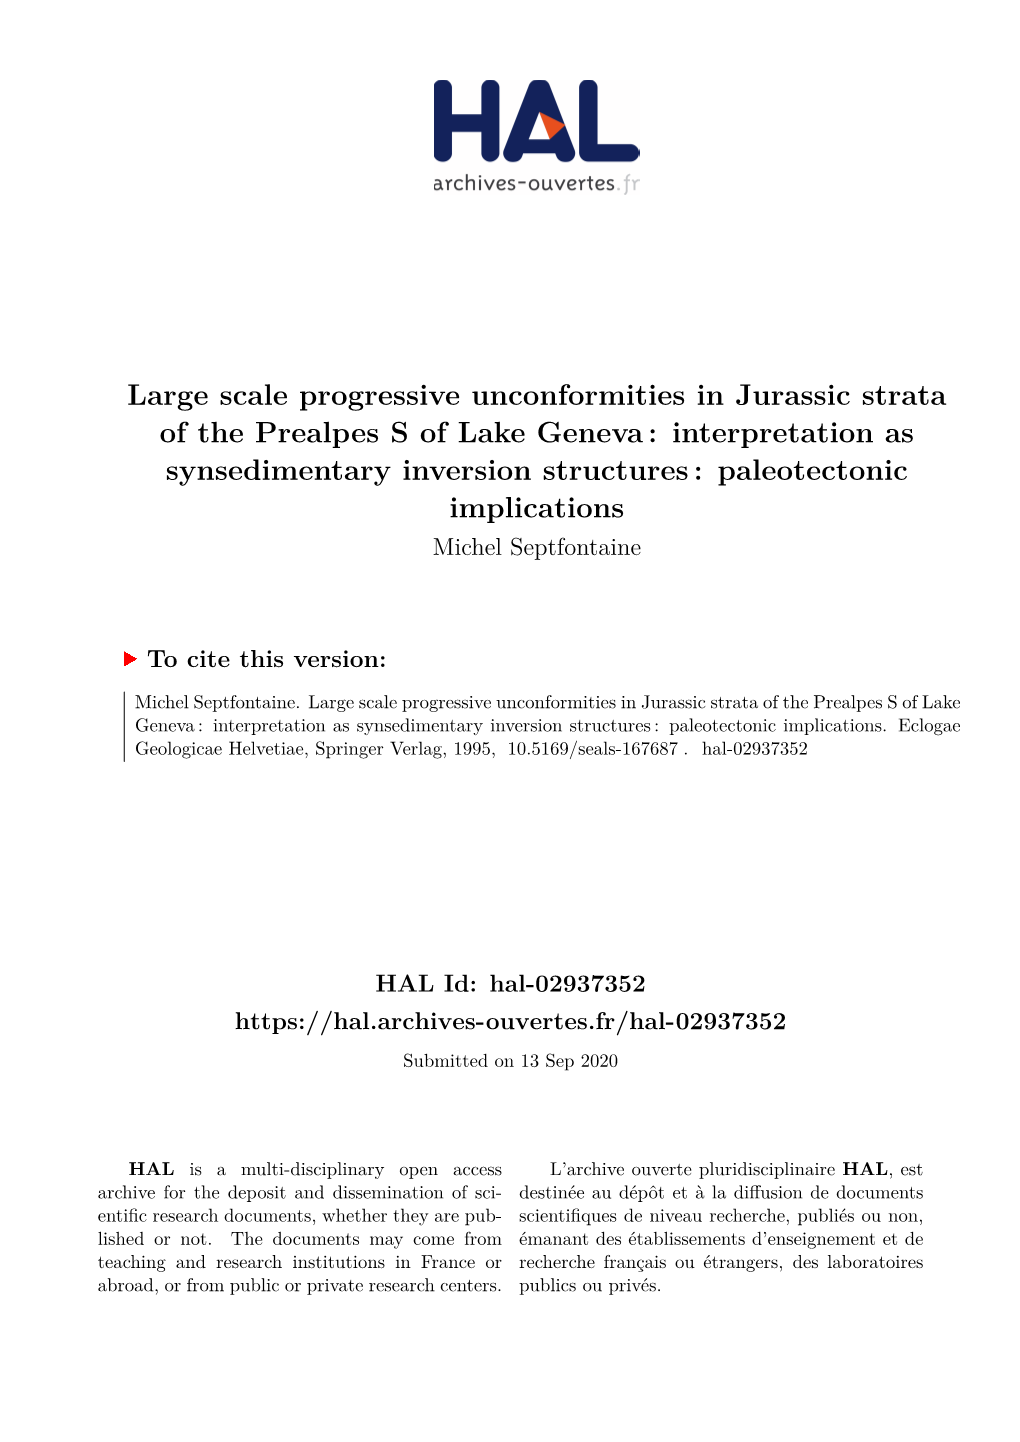 Large Scale Progressive Unconformities in Jurassic Strata of the Prealpes S of Lake Geneva: Interpretation As Synsedimentary